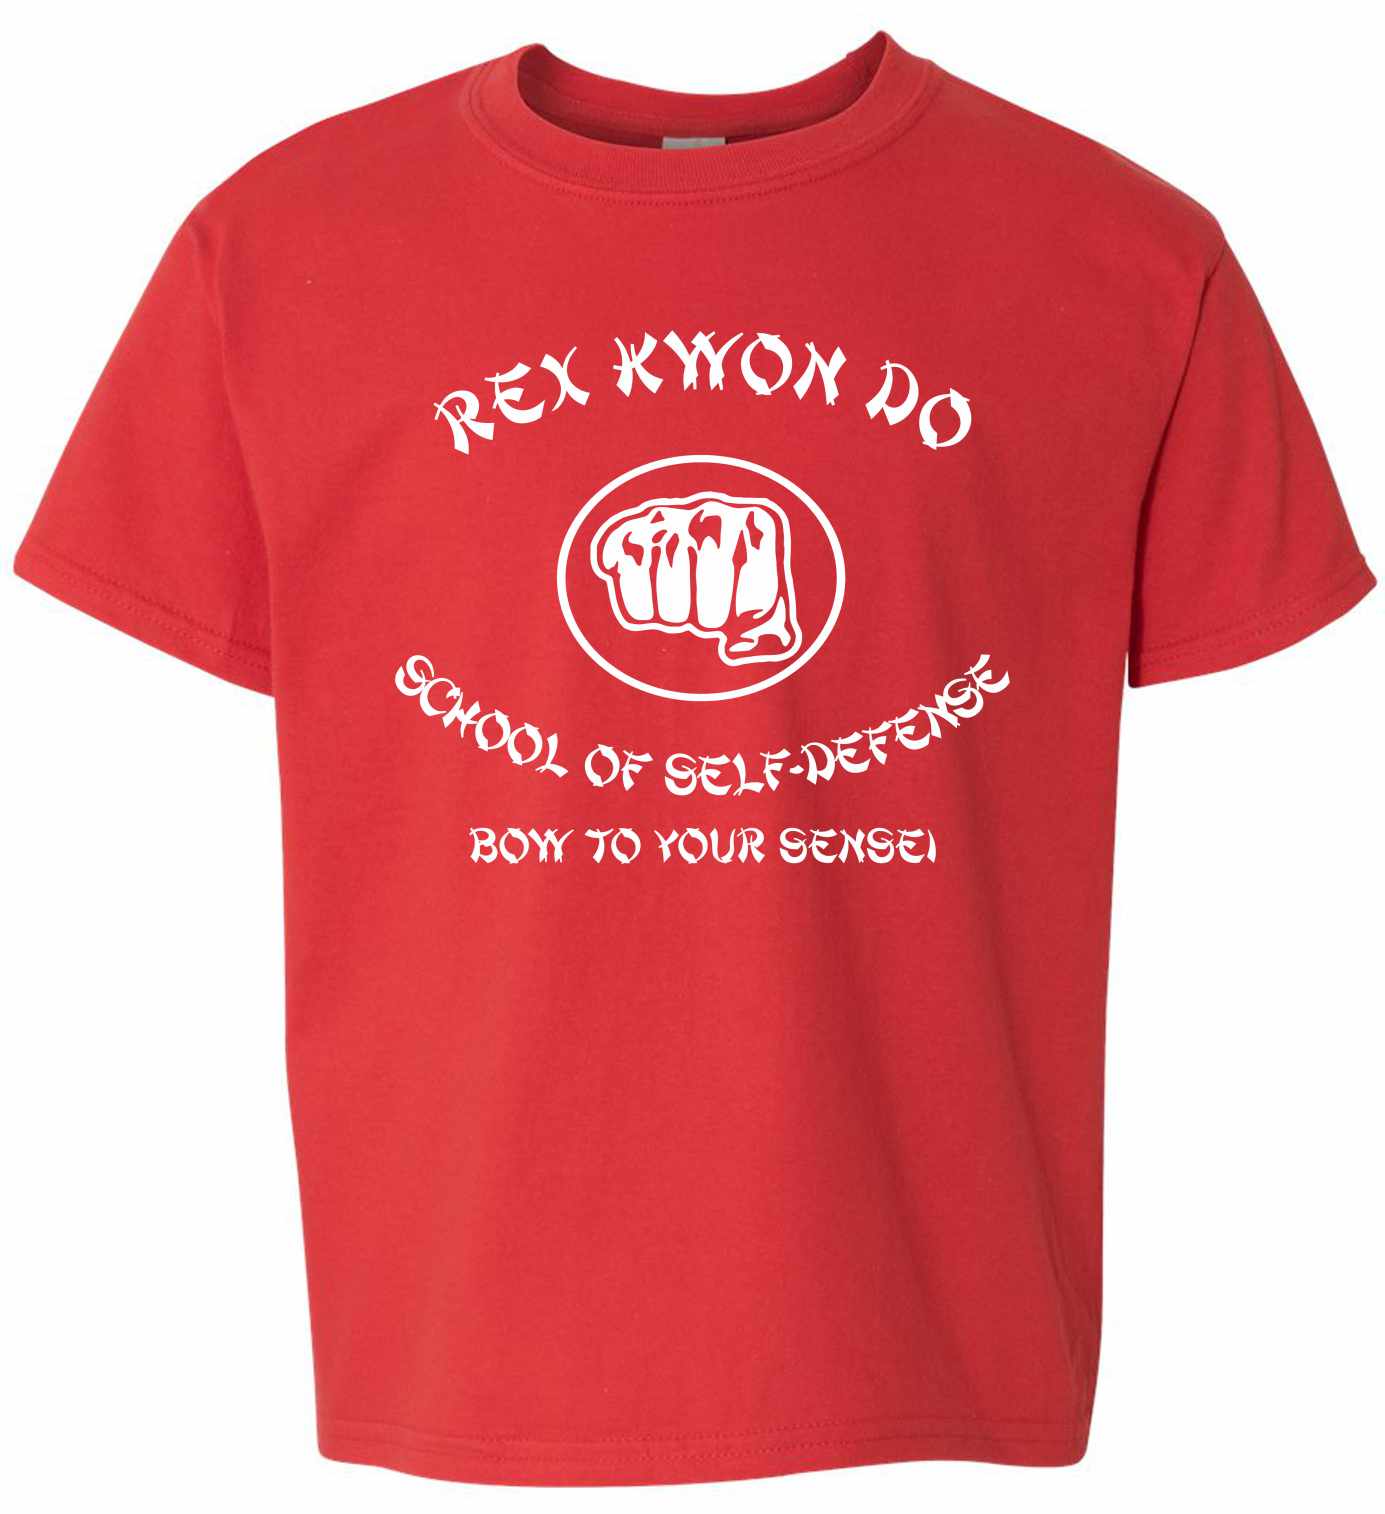 REX KWON DO SCHOOL OF SELF DEFENSE on Kids T-Shirt